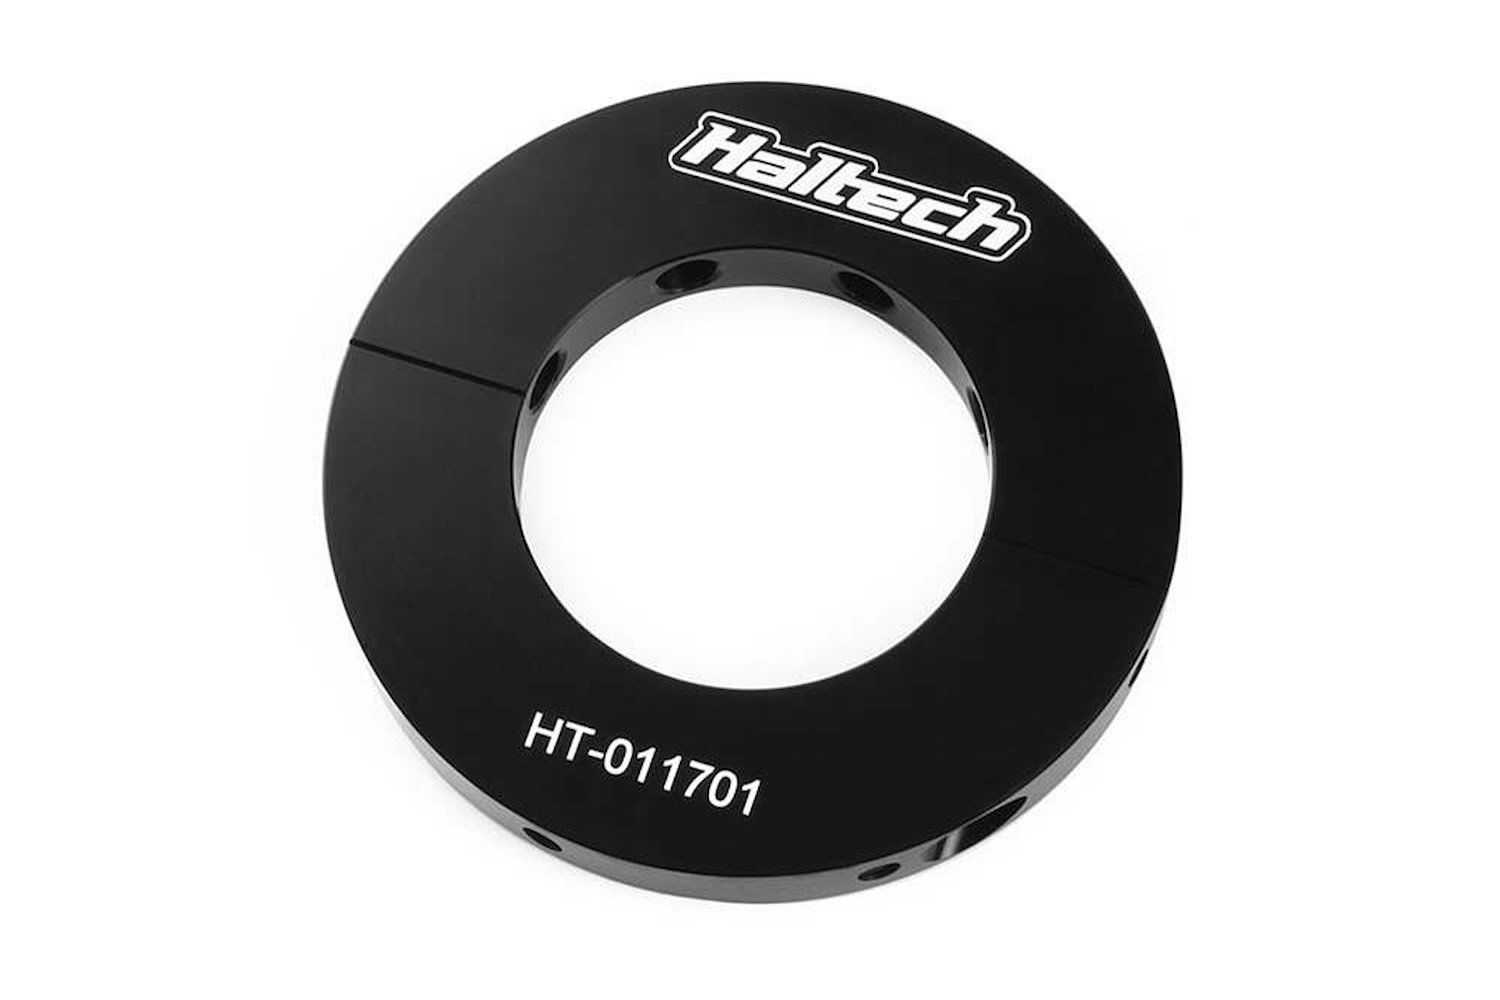 HT-011701 Driveshaft Split Collar, 1.875 in. / 47.63 mm I.D., 8 Magnet